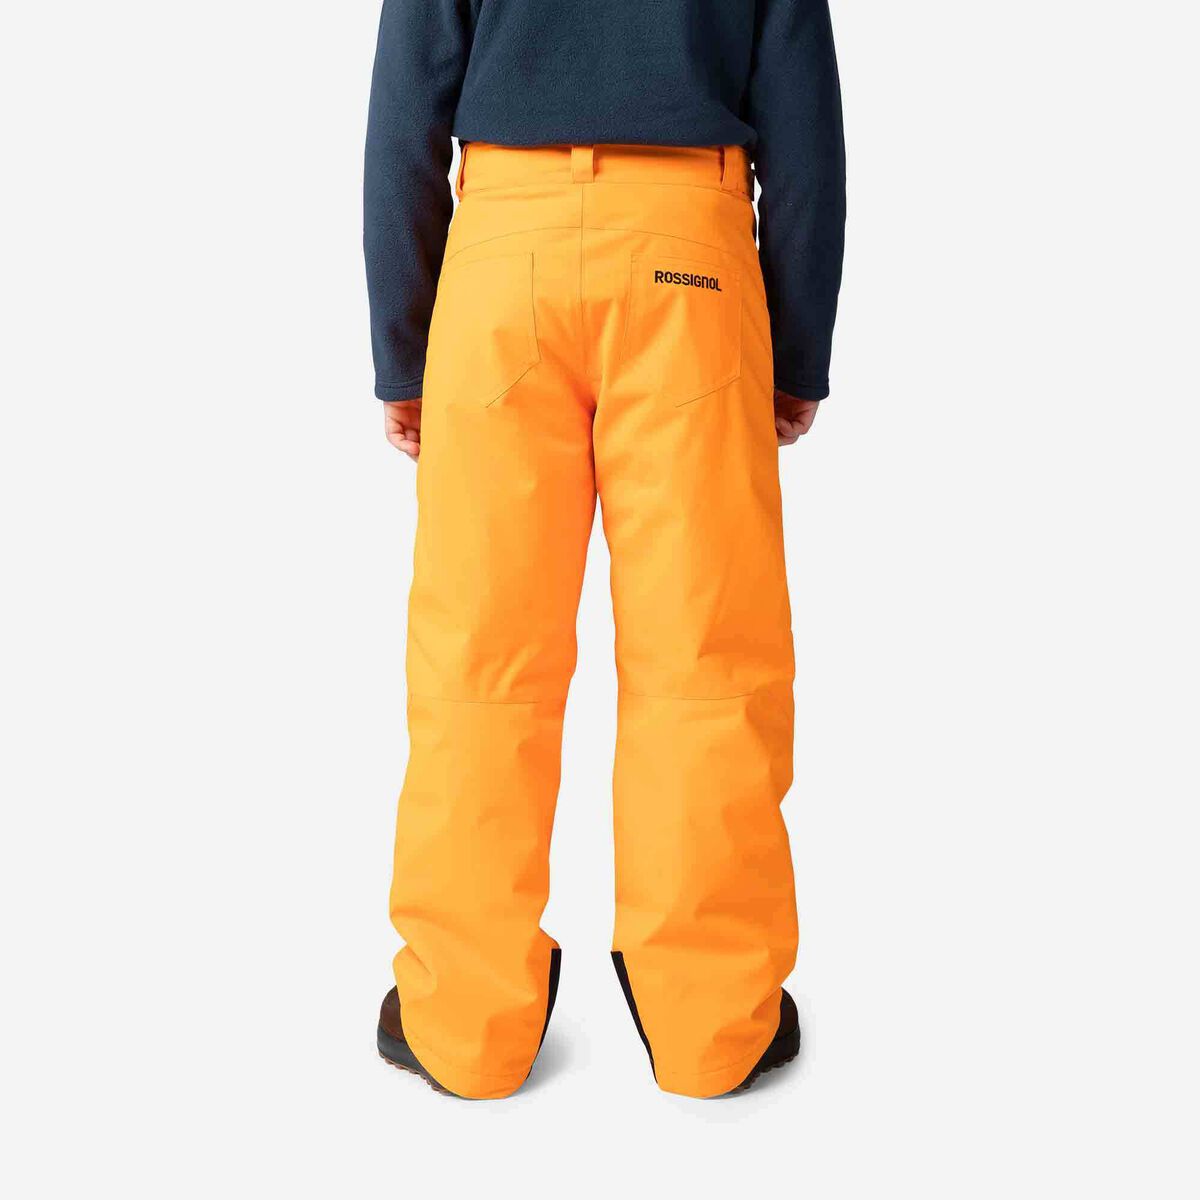 Rossignol Boys' Ski Pants Orange